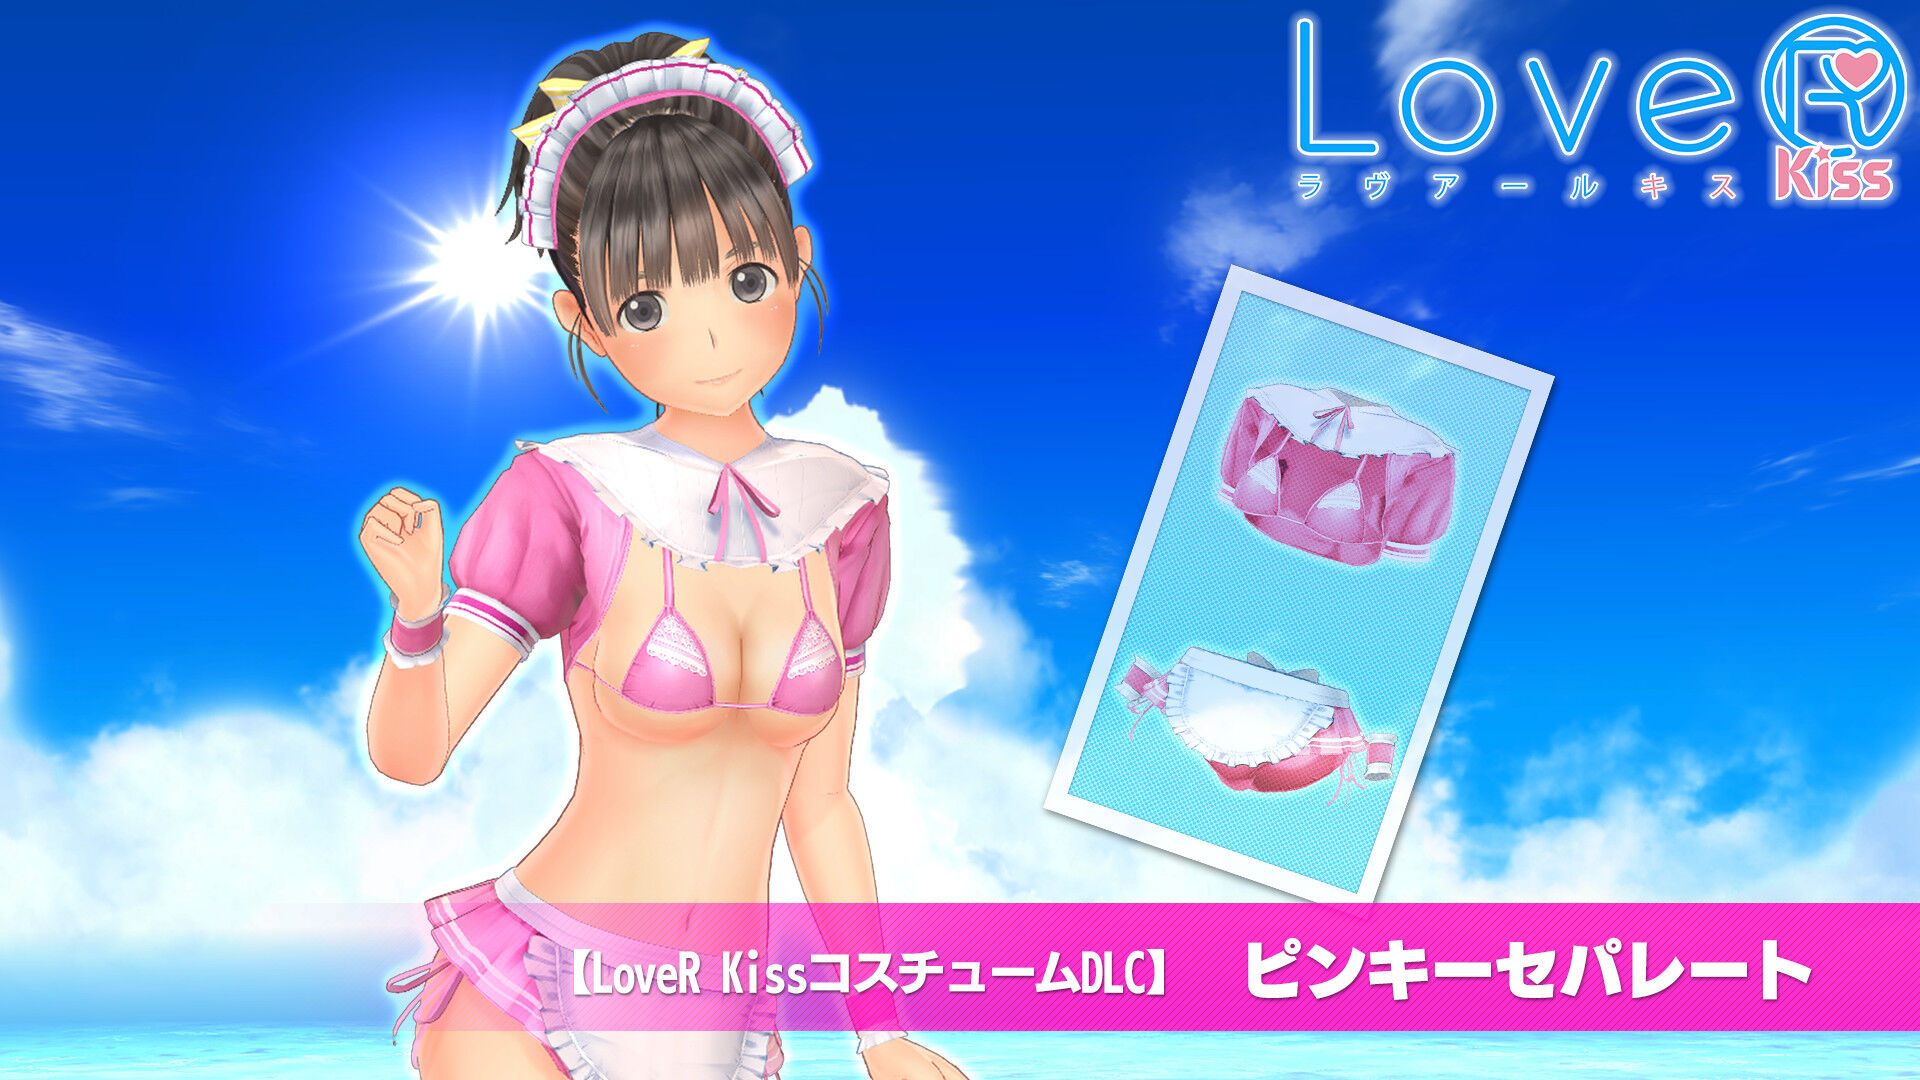 LoveR KissコスチュームDLC】ピンキーセパレート | My Nintendo Store 